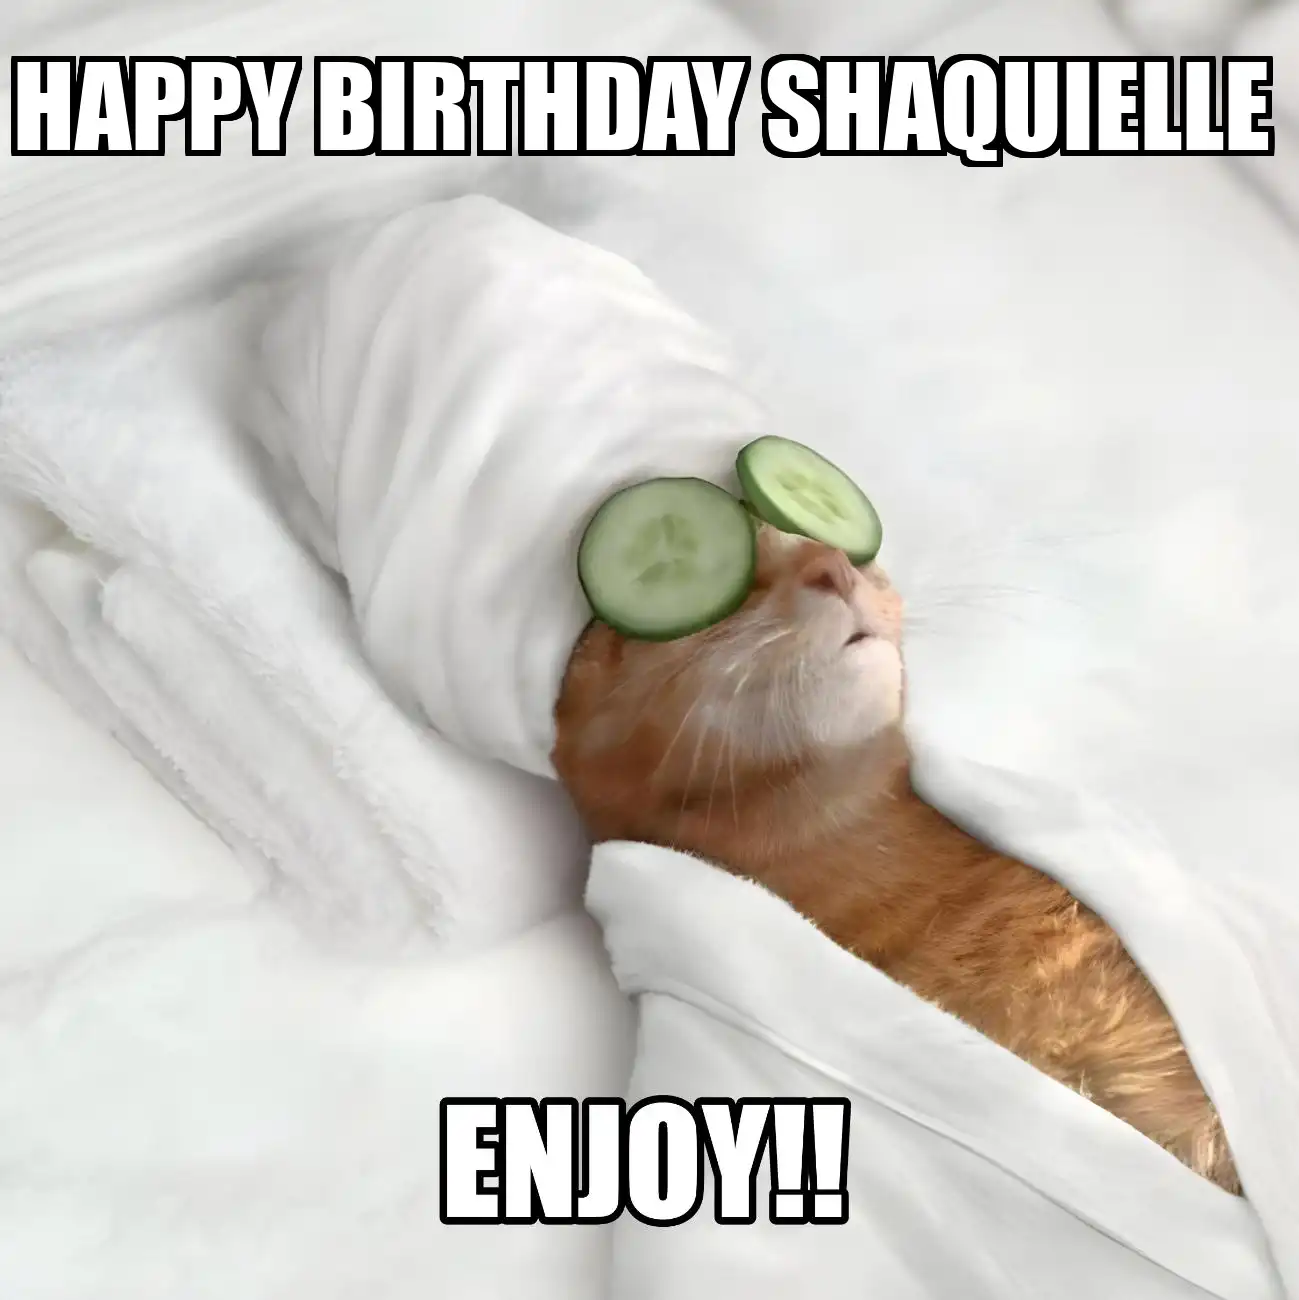 Happy Birthday Shaquielle Enjoy Cat Meme